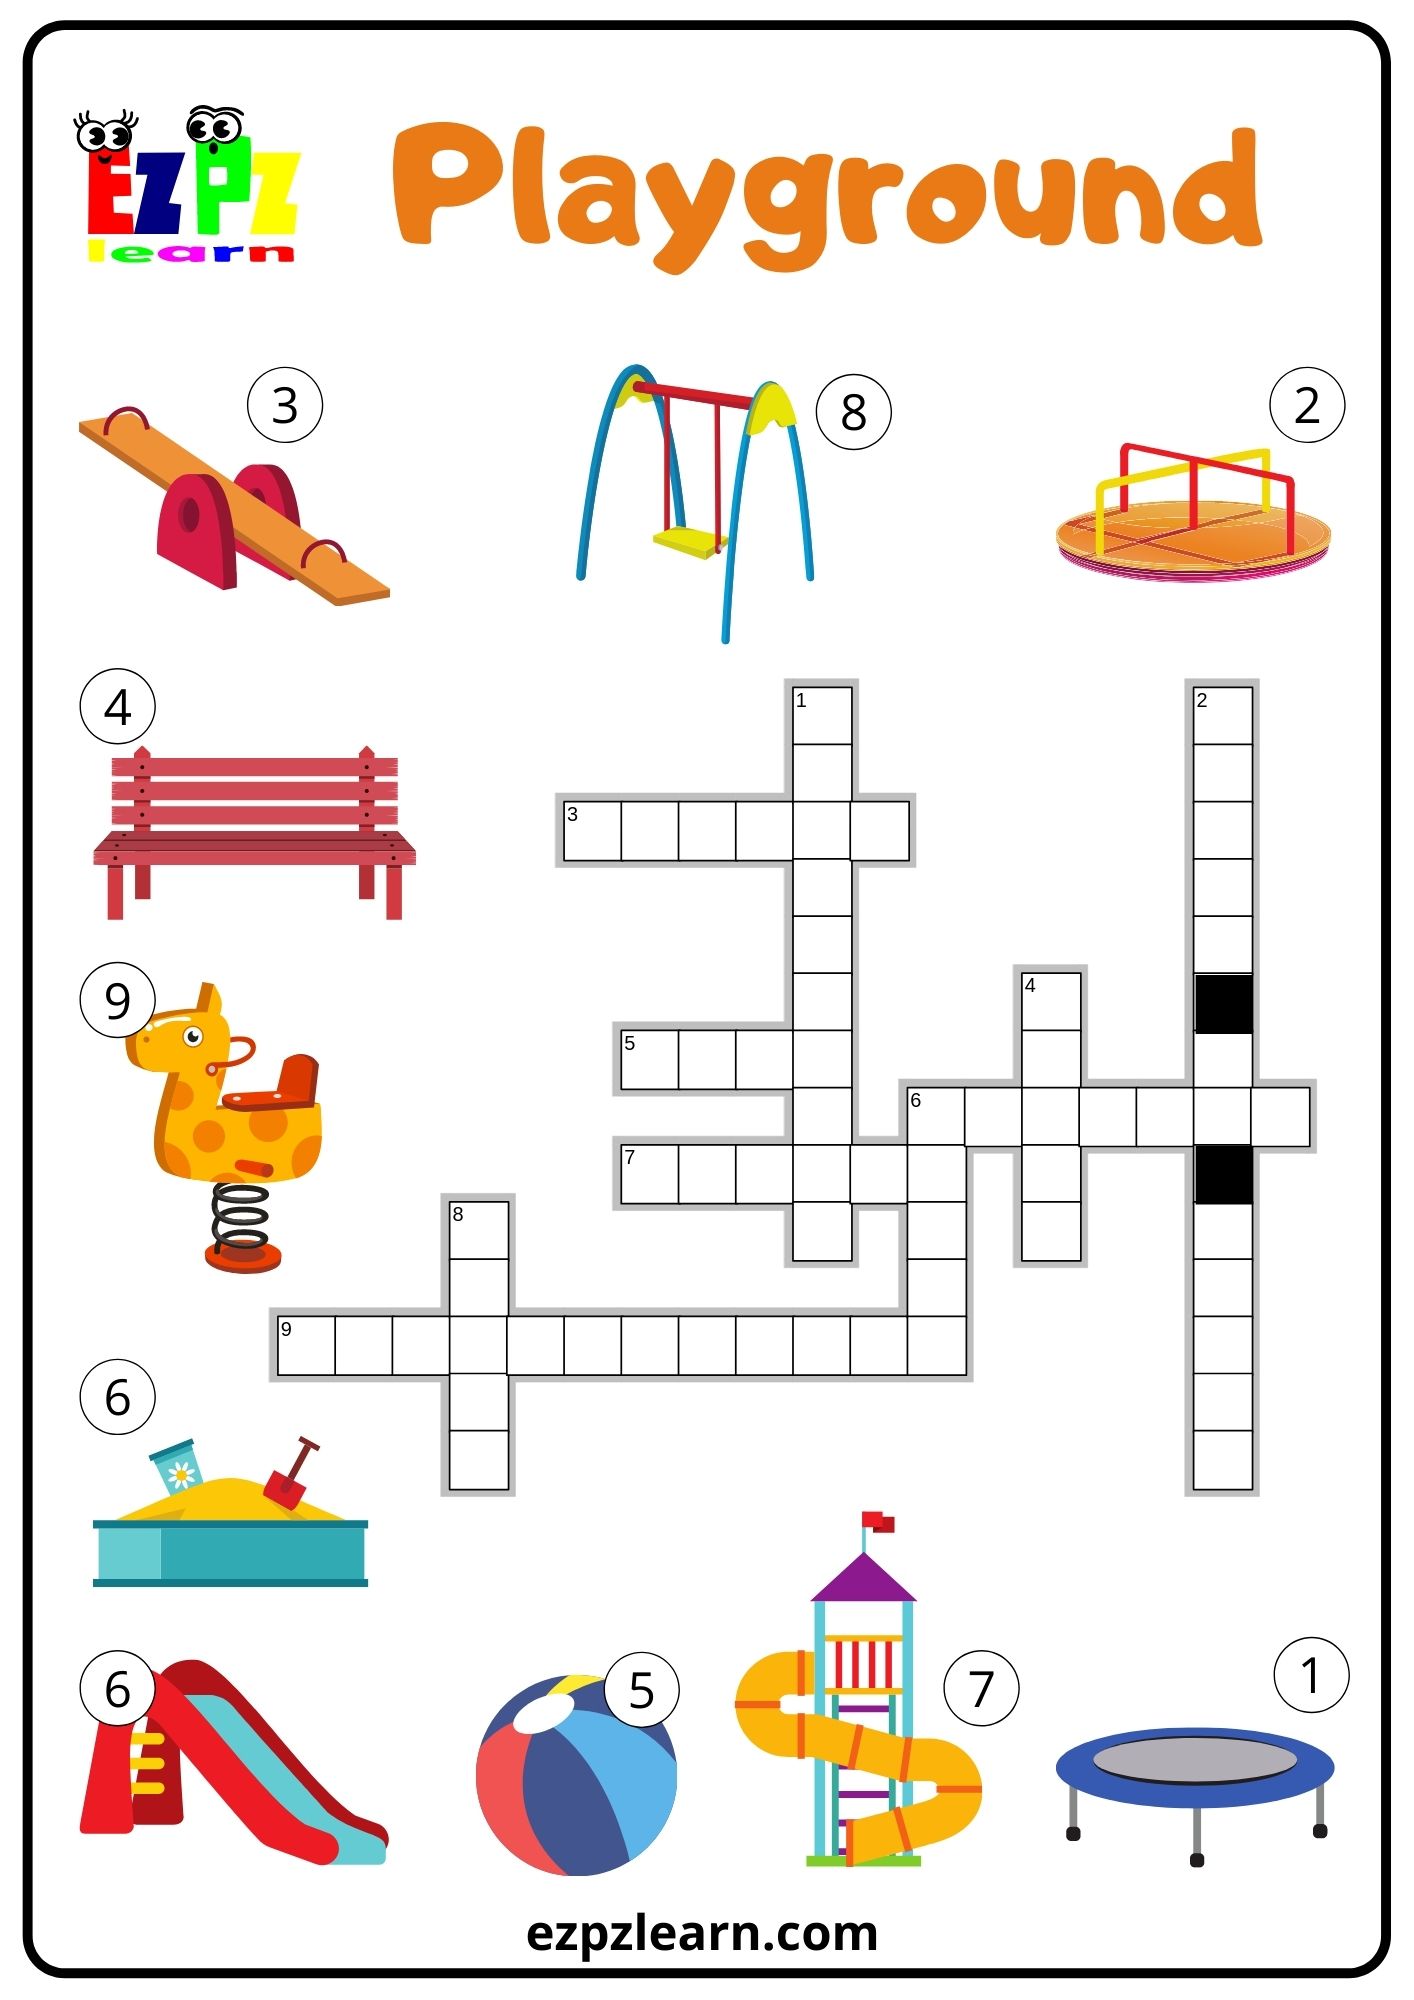 Playground Comeback Crossword